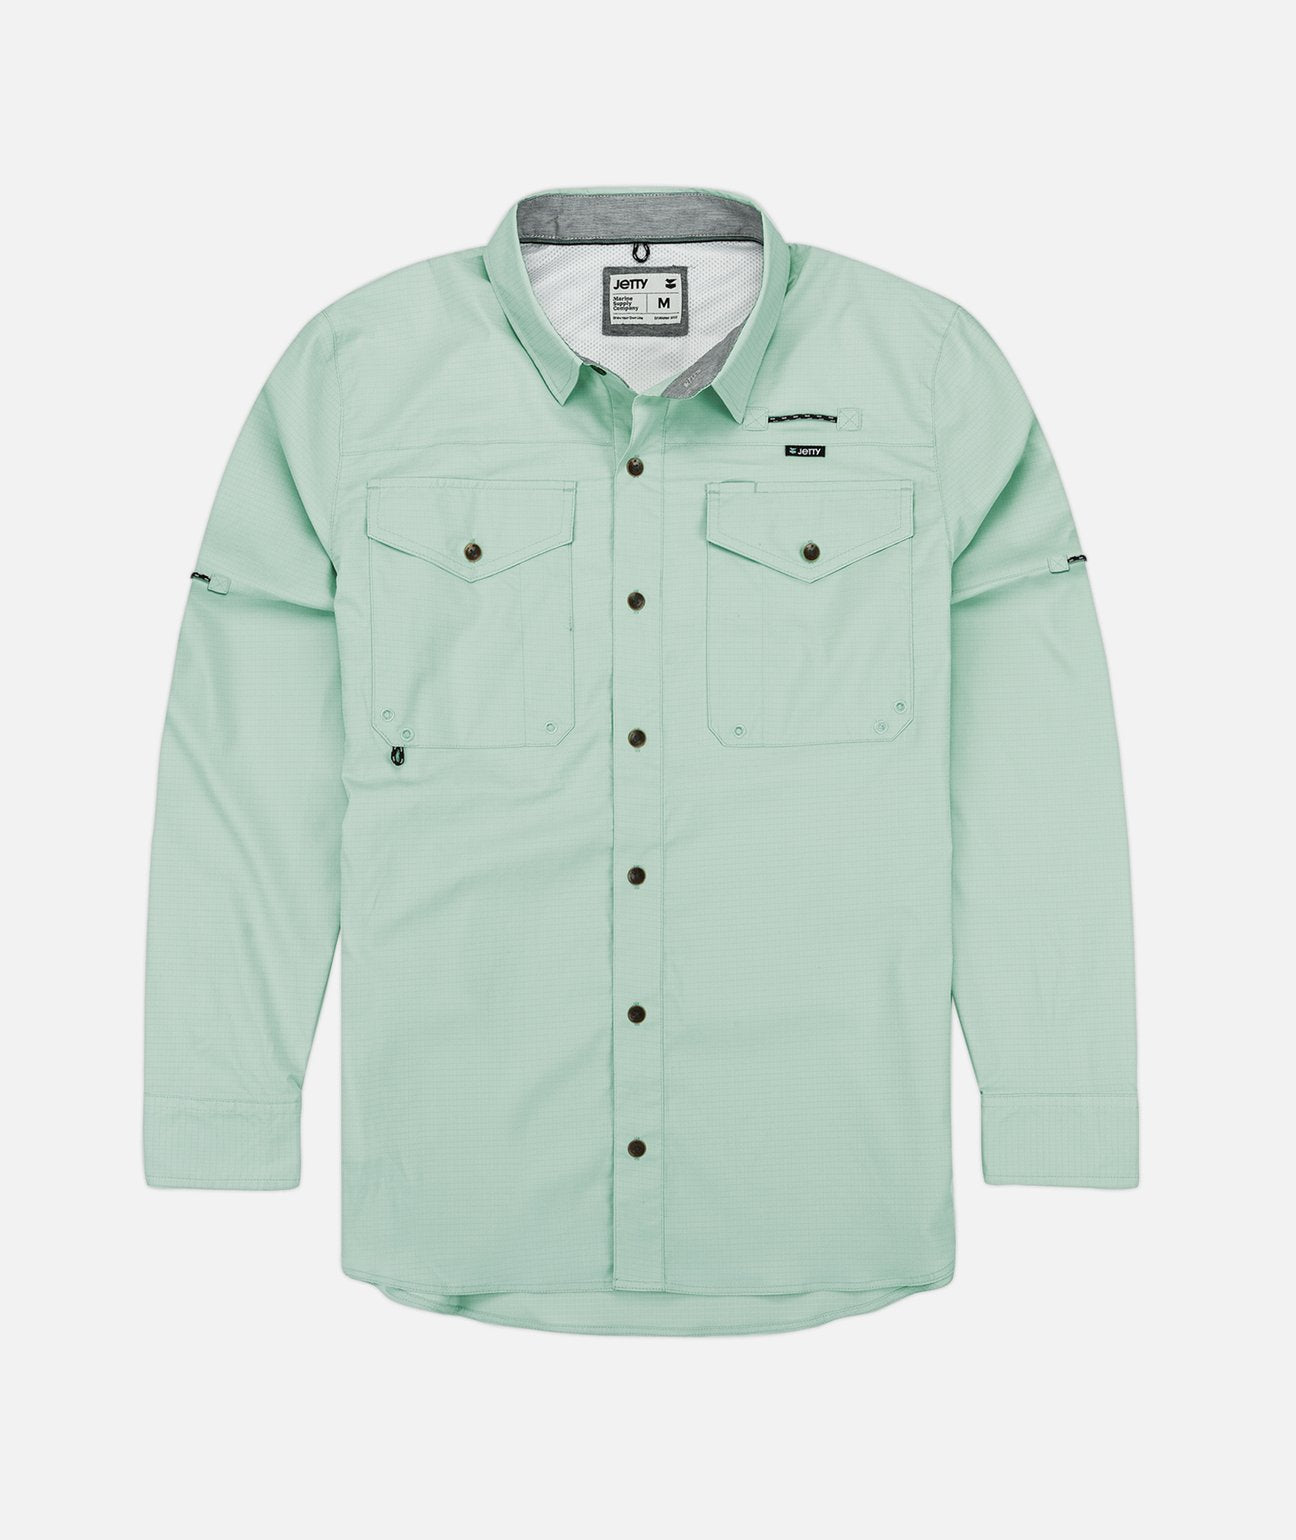 Bowline Guide Shirt - Mint - The Lake and Company